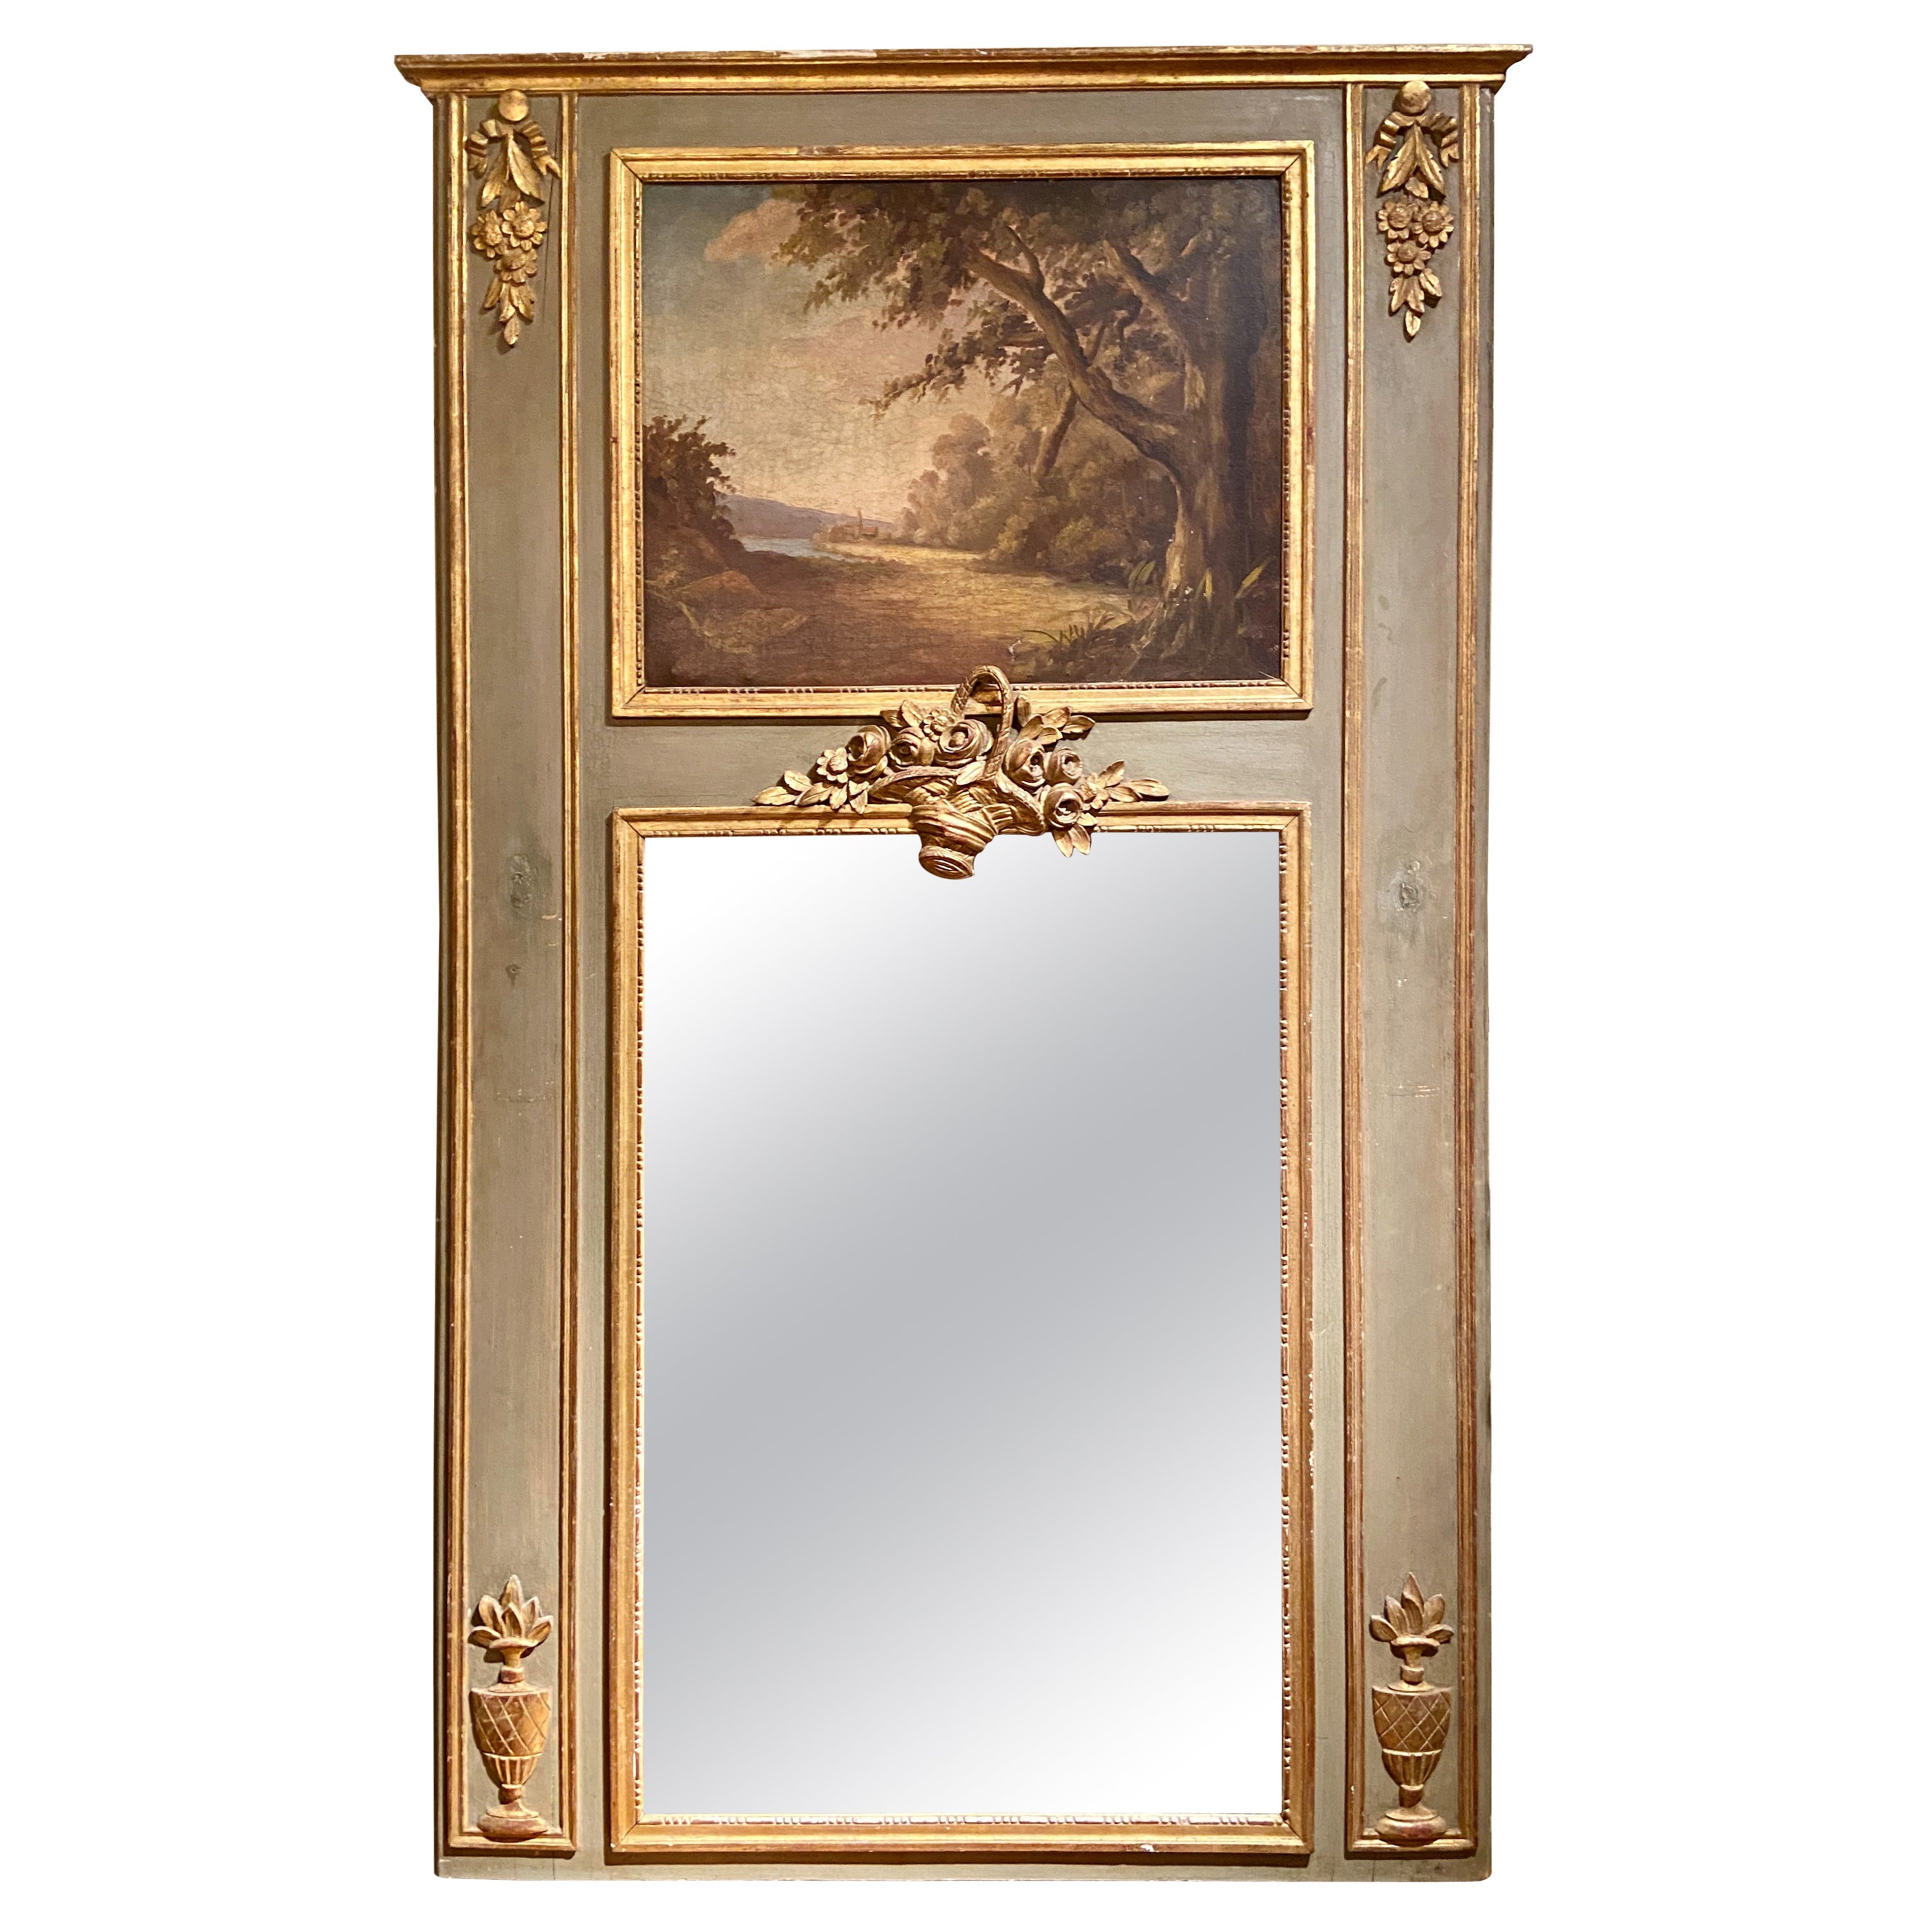 Antique French Provincial Trumeau Mirror with Landscape Scene, Circa 1880